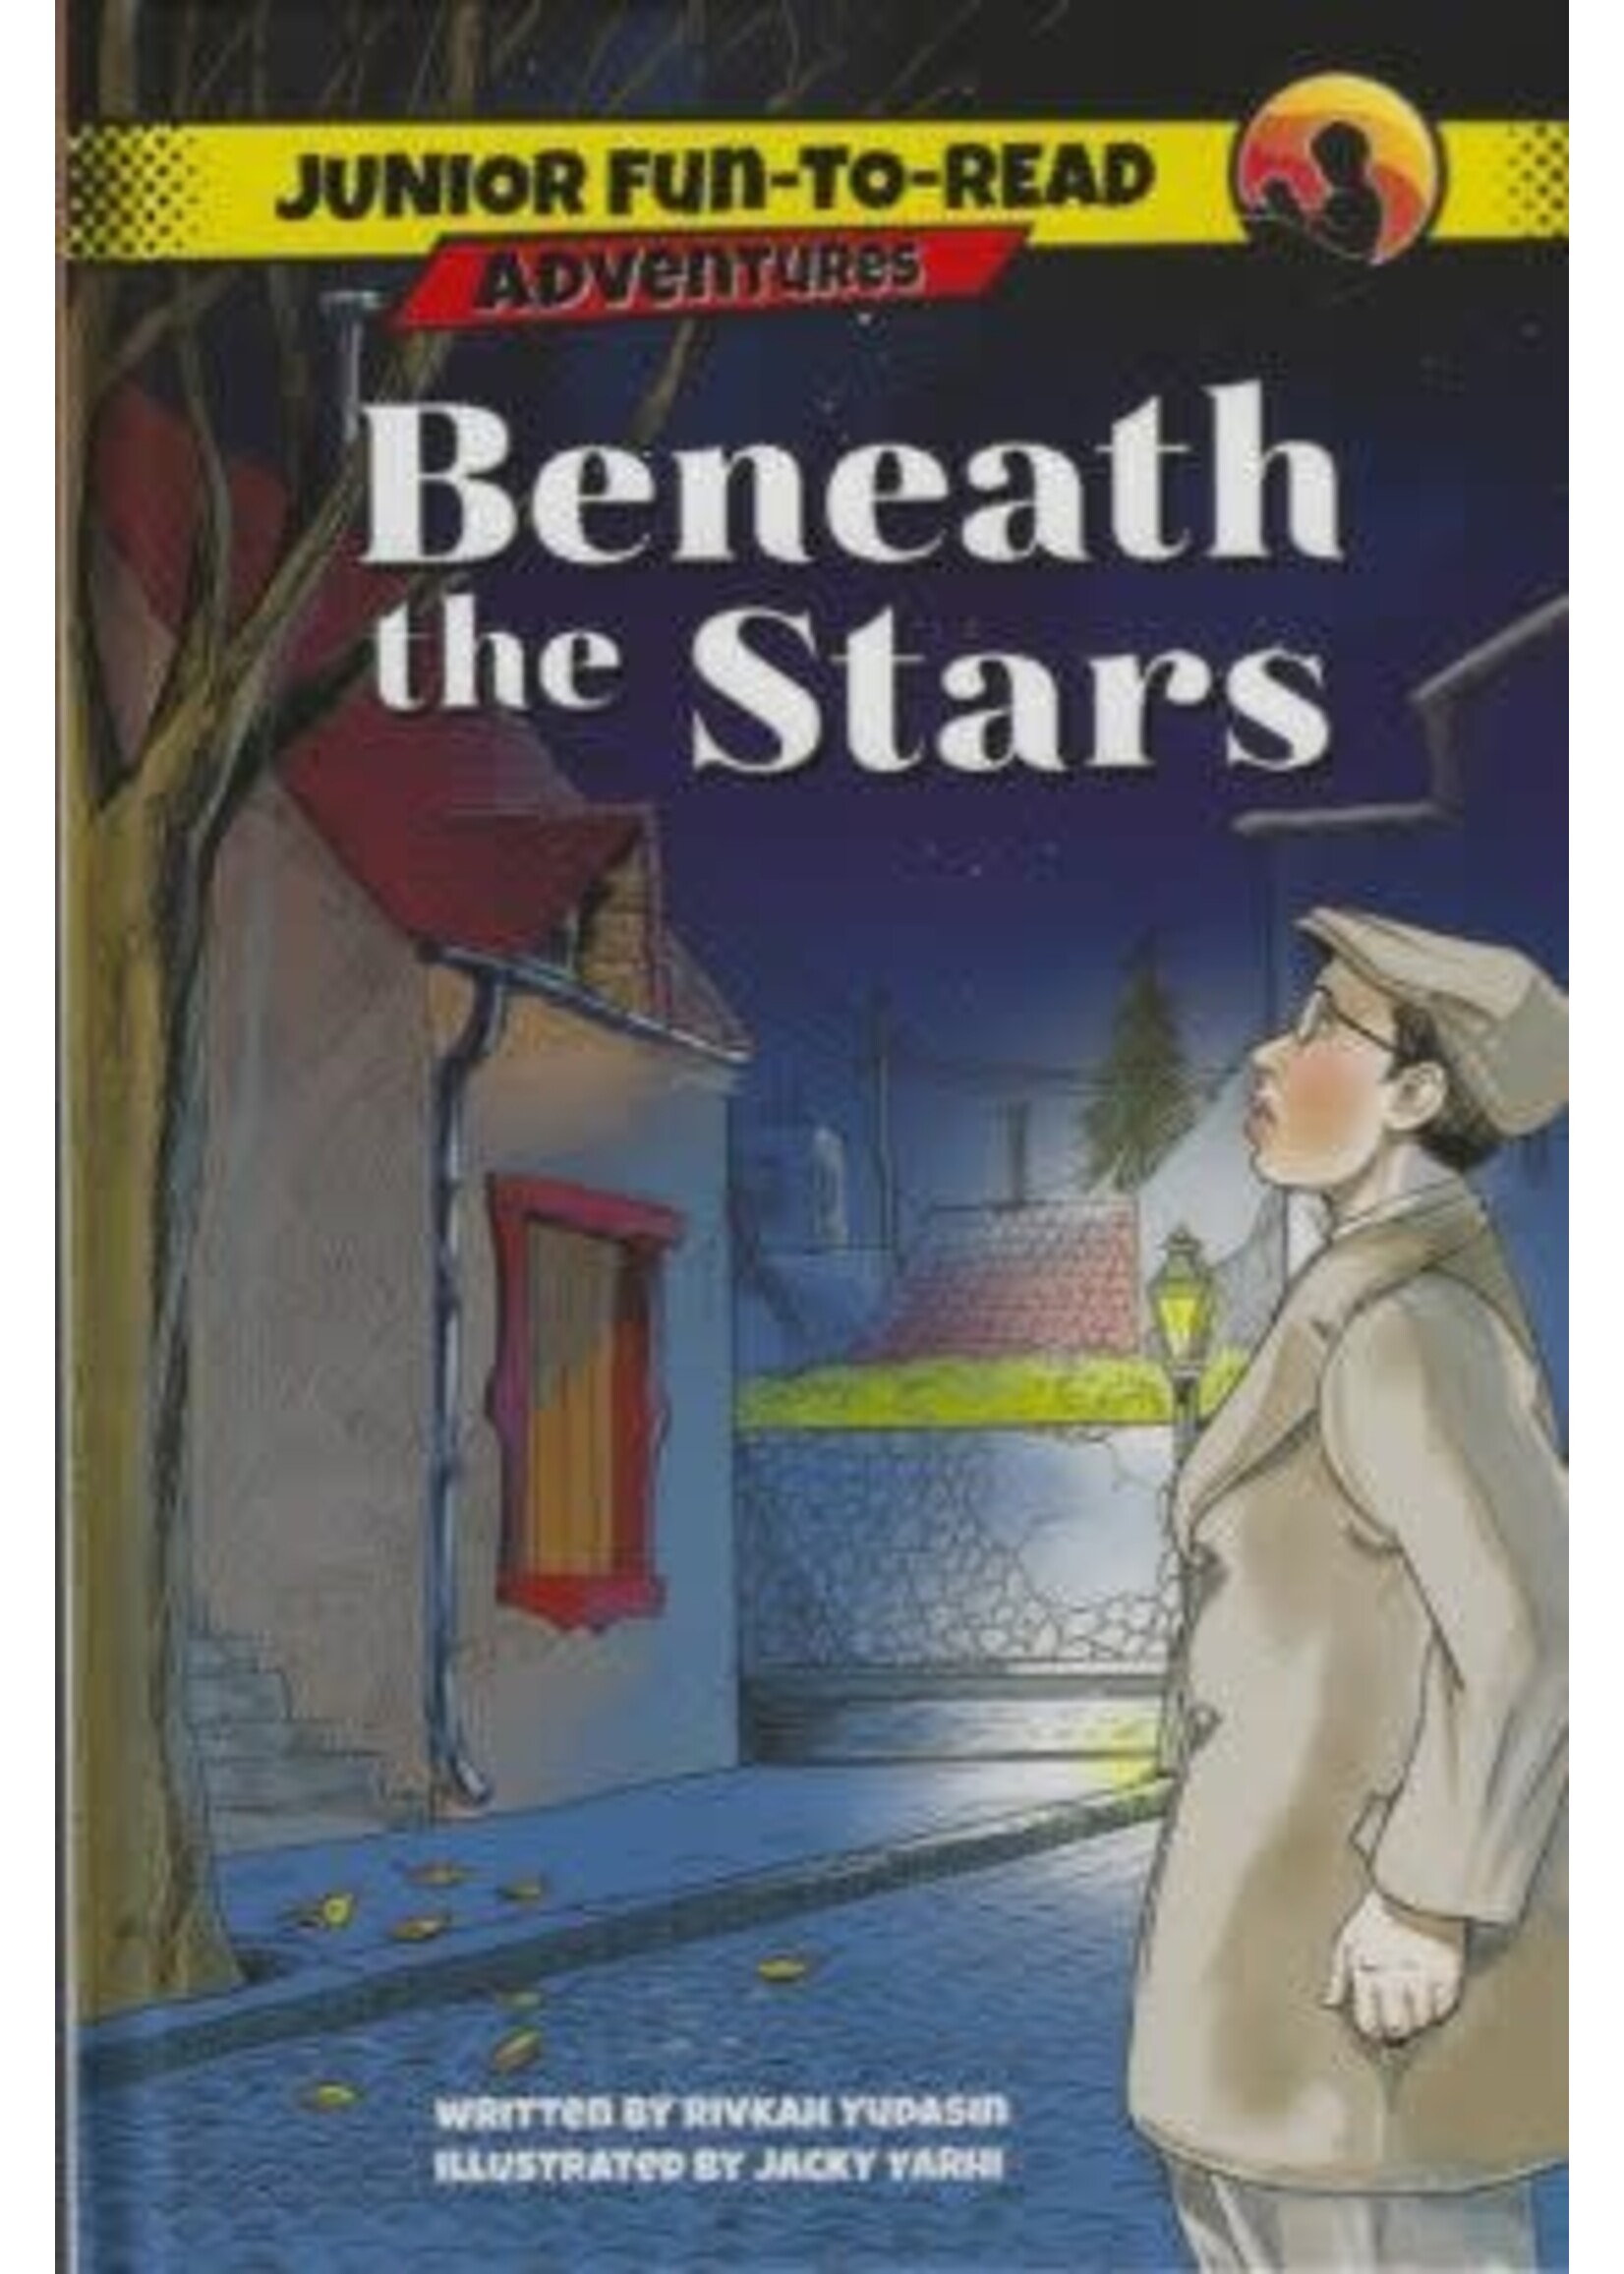 BENEATH THE STARS